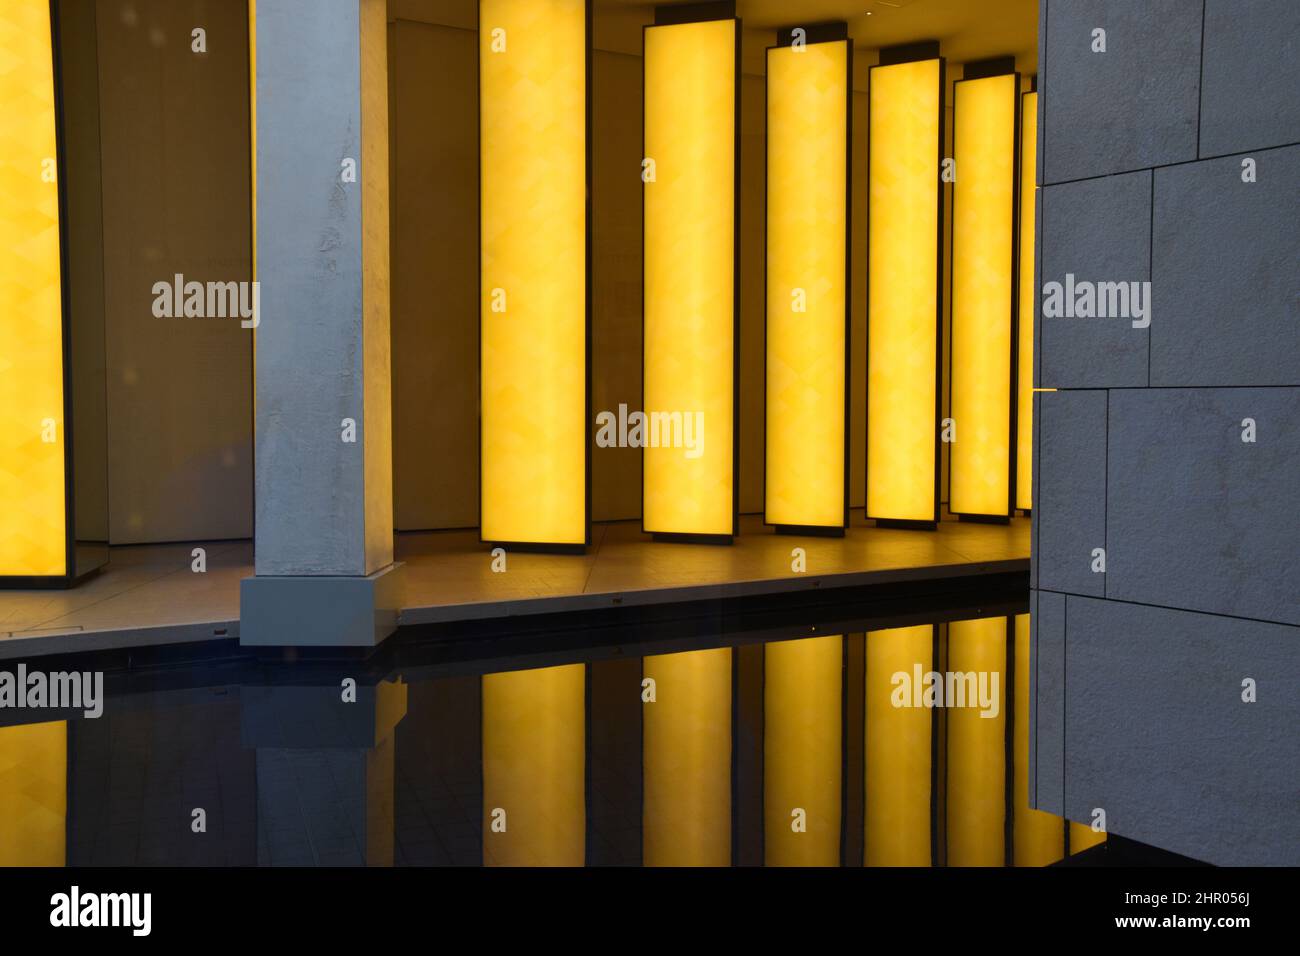 Contemporary water reflected interior walls illuminated by large yellow rectangular lights. Stock Photo